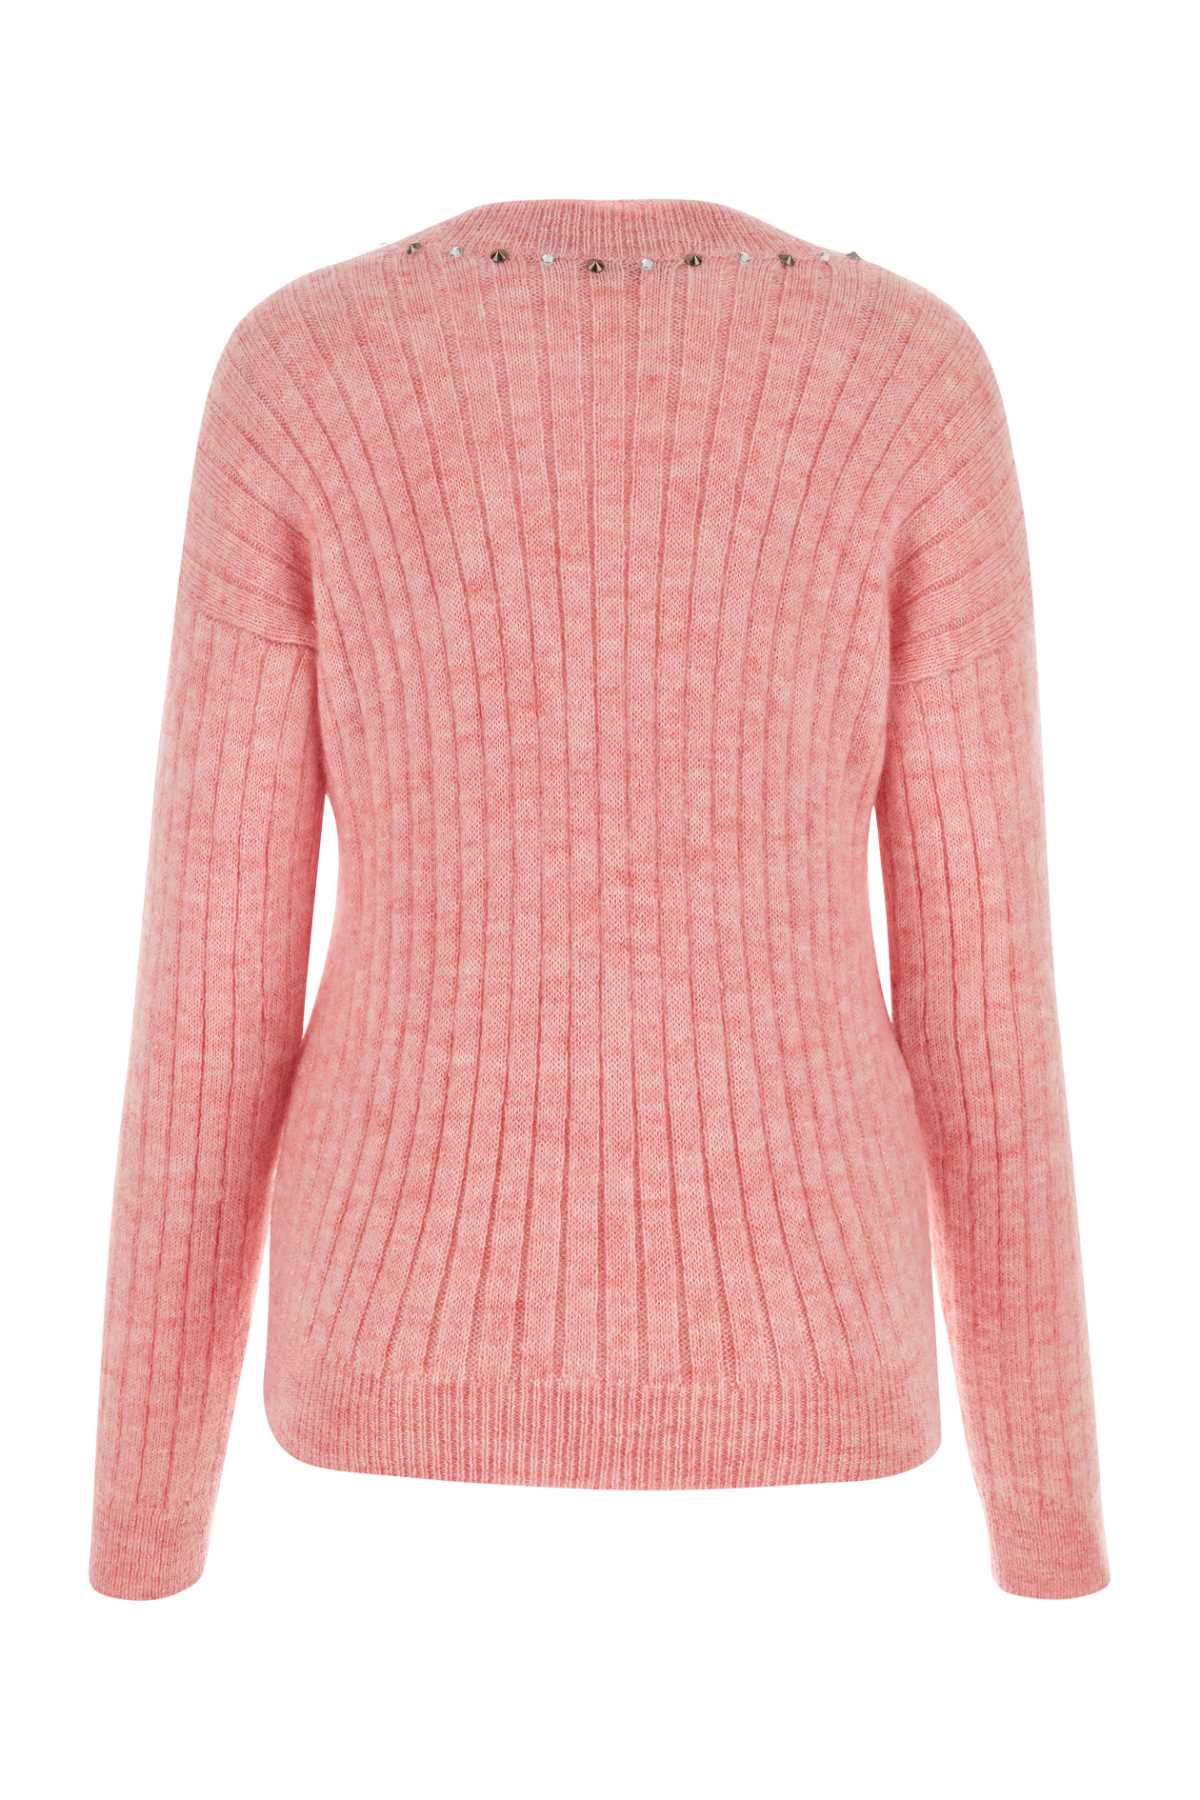 Alessandra Rich Melange Pink Wool Blend Jumper In Pinkme